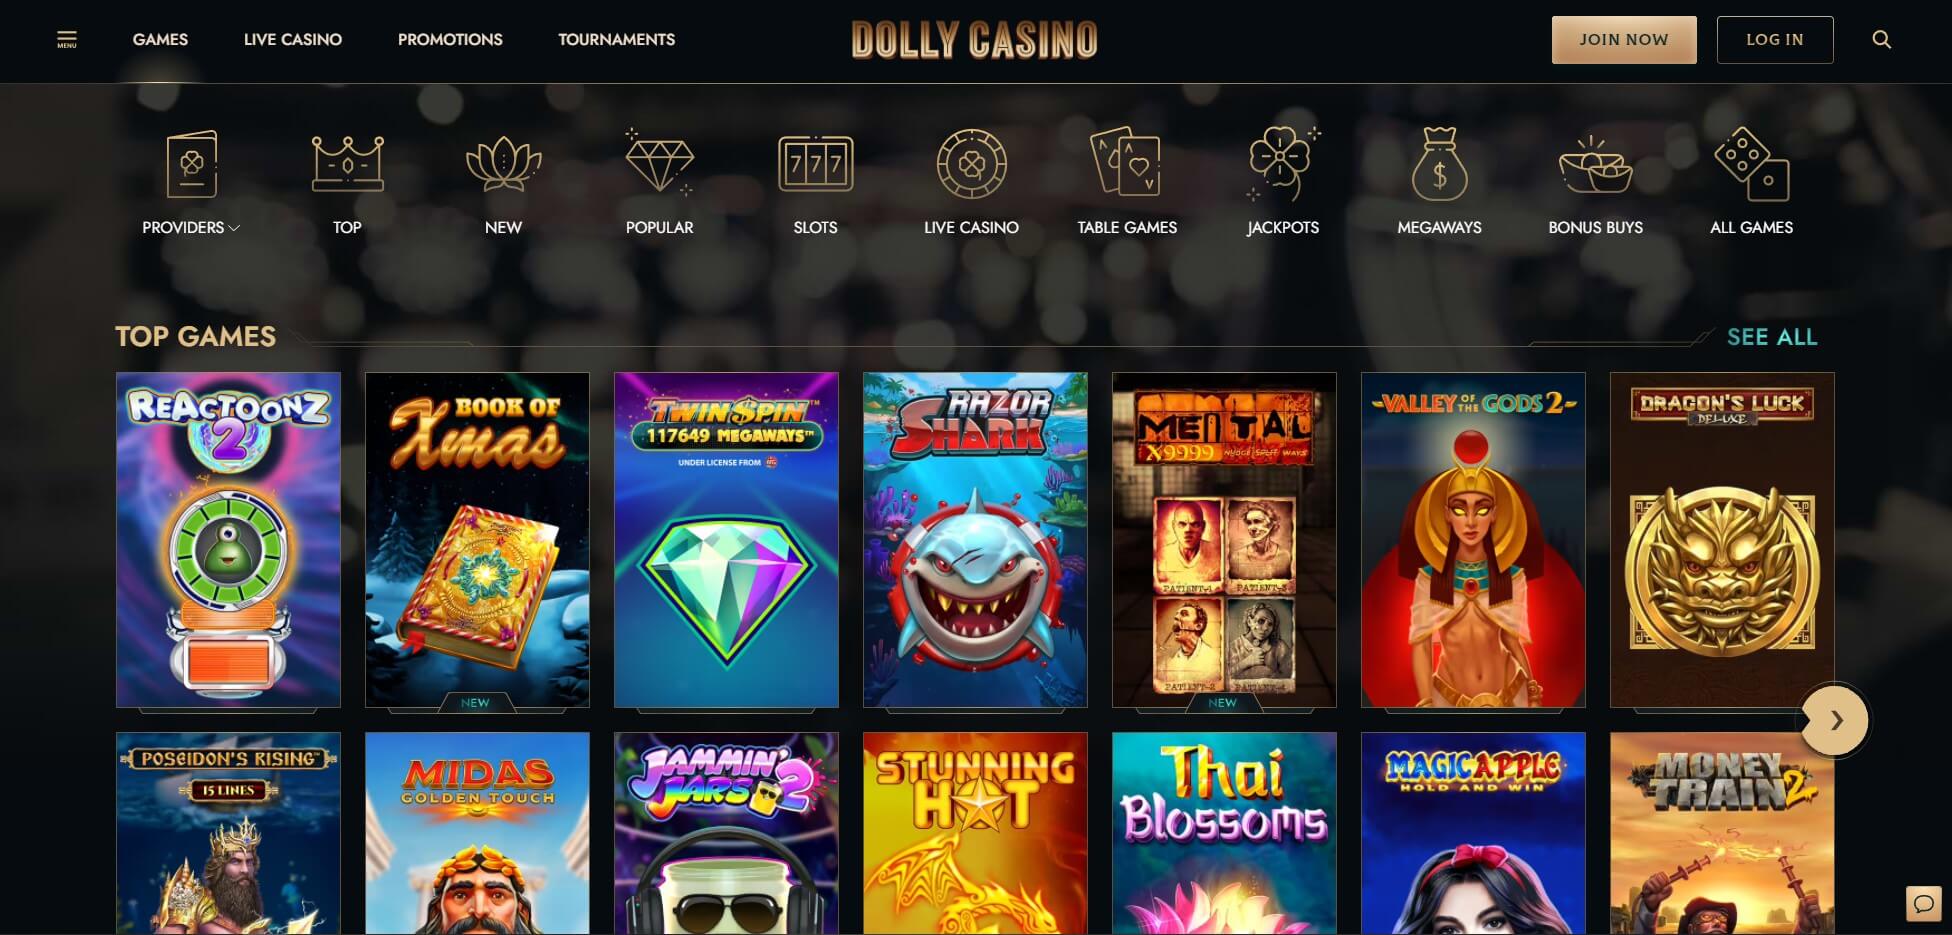 Games at Dolly Casino